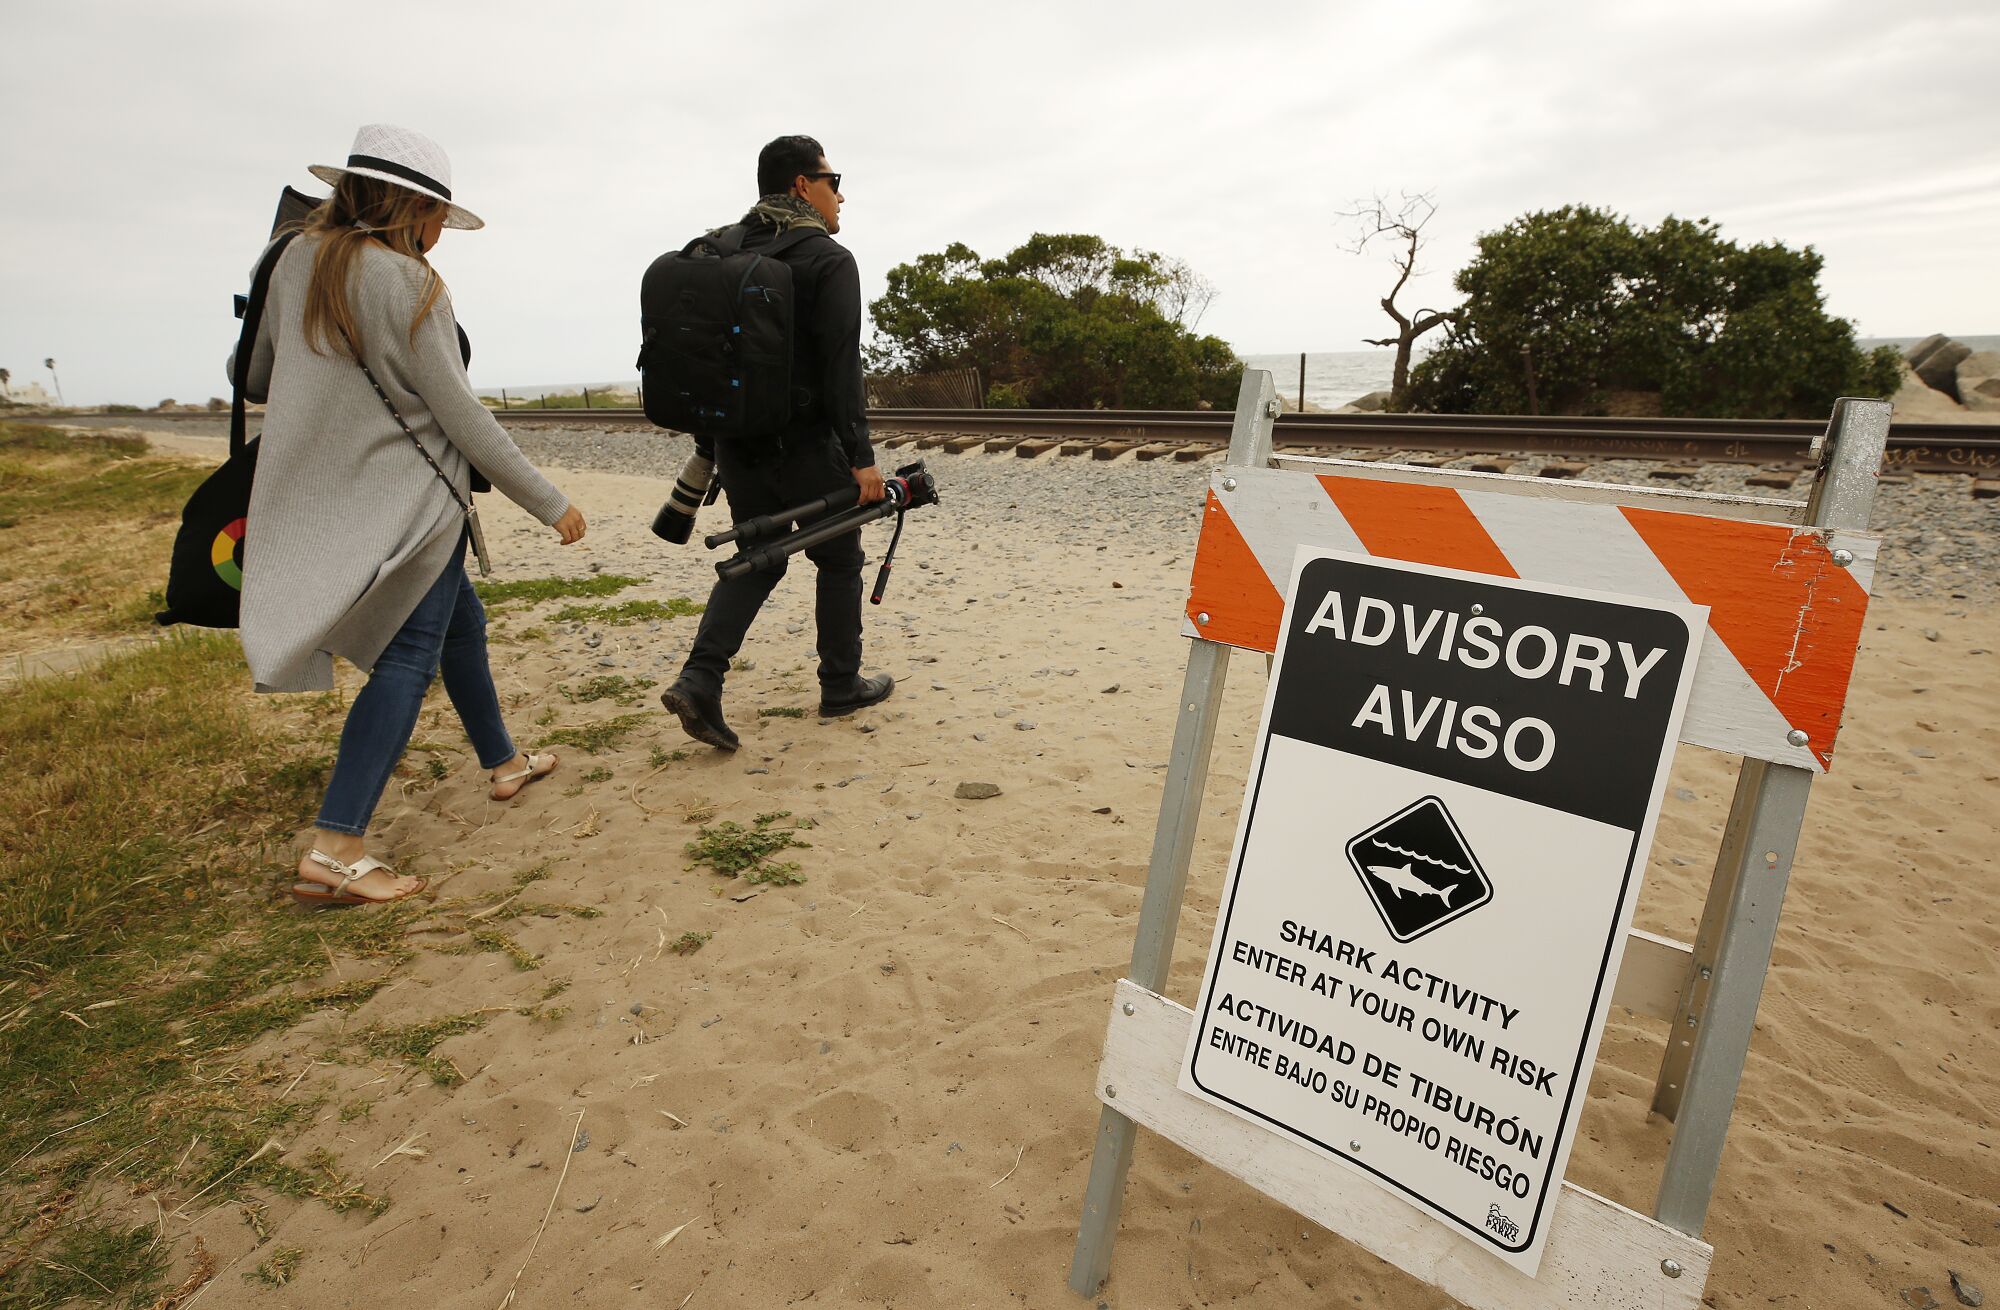 Drone photographer Carlos Gauna and his wife, Andressa, head to a beach along the Santa Barbara County coast.